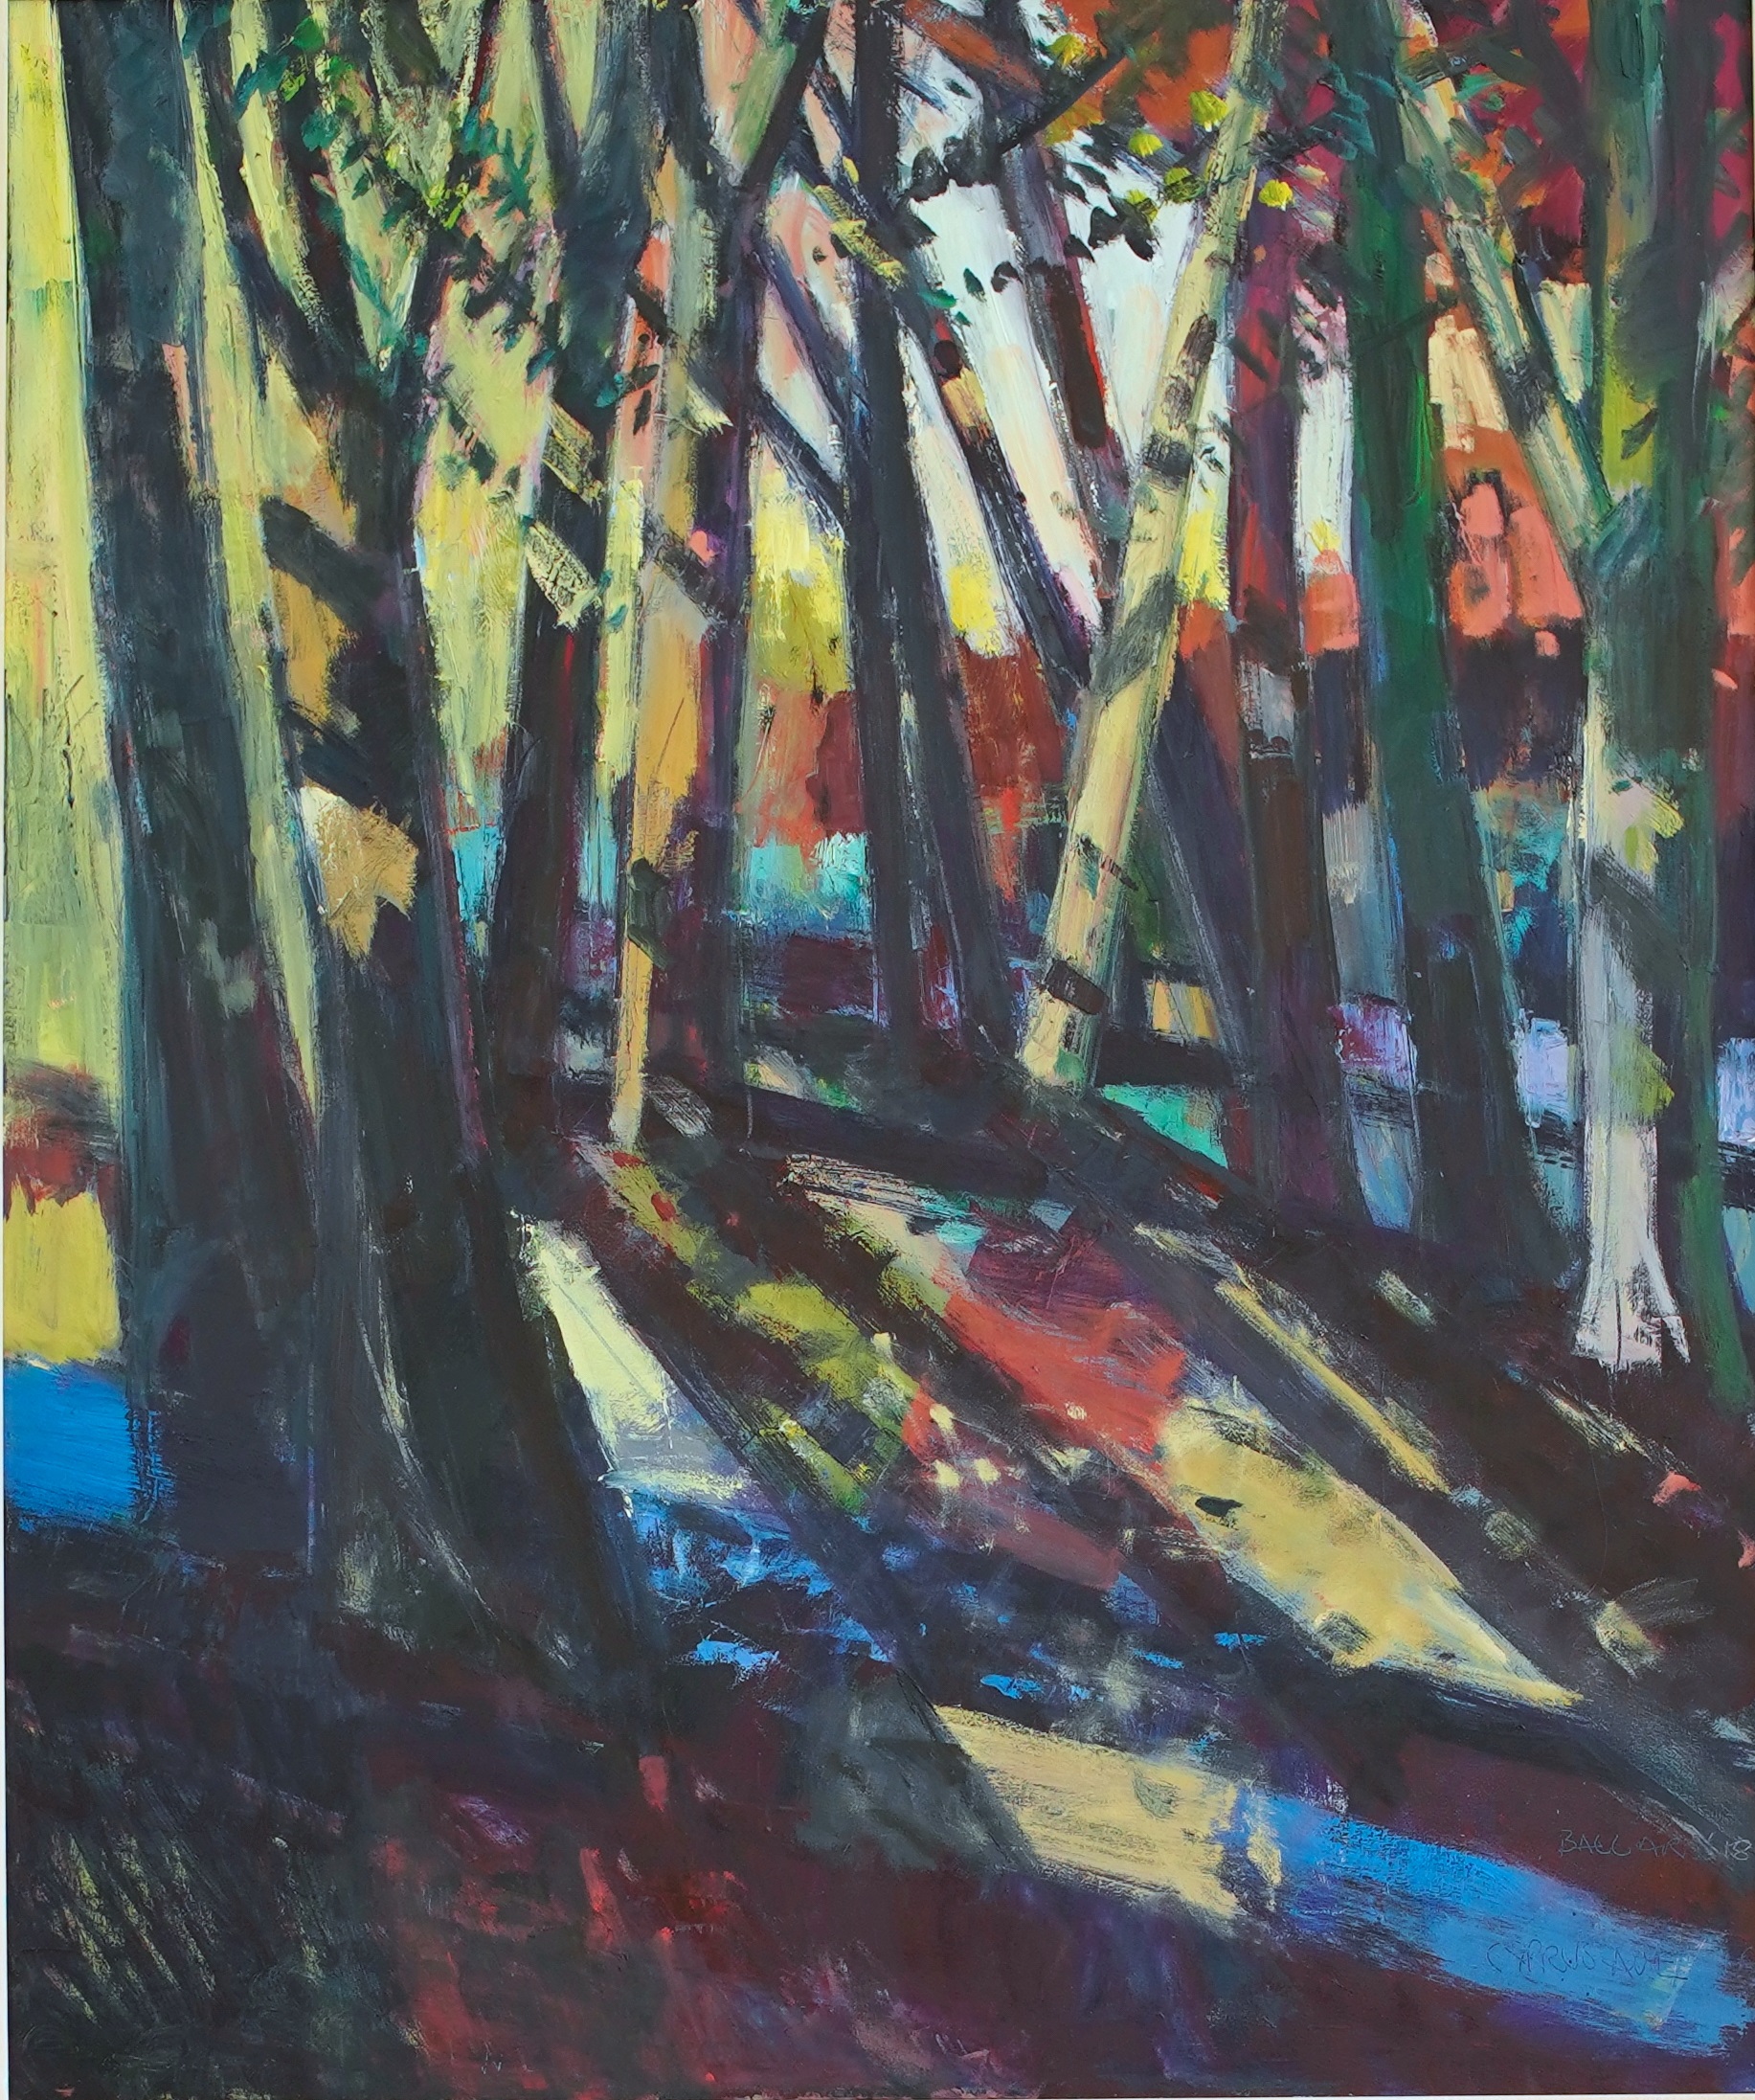 'Cyprus Avenue, Green', oil on canvas, 120cm x 100cm, £9000